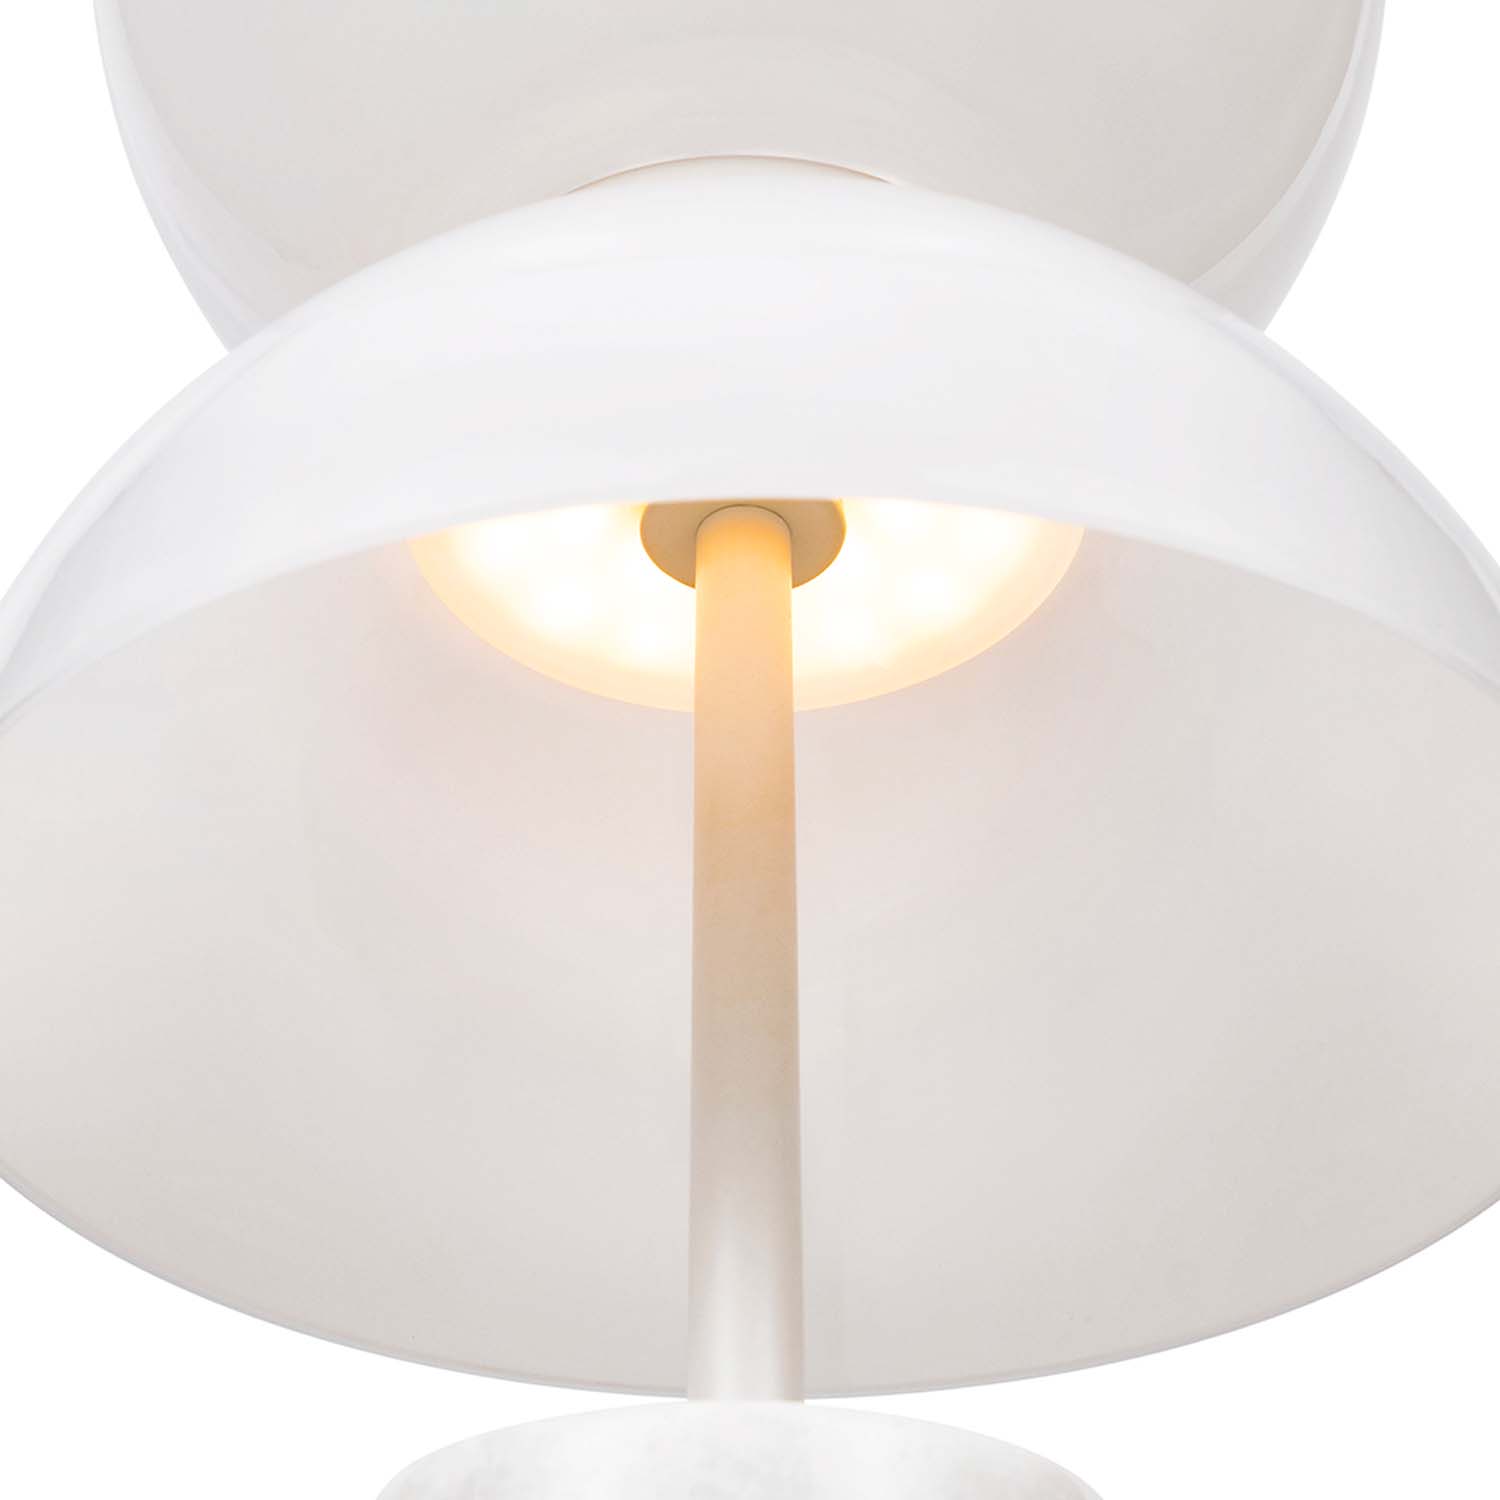 KYOTO - Lampe à poser design marbre et verre